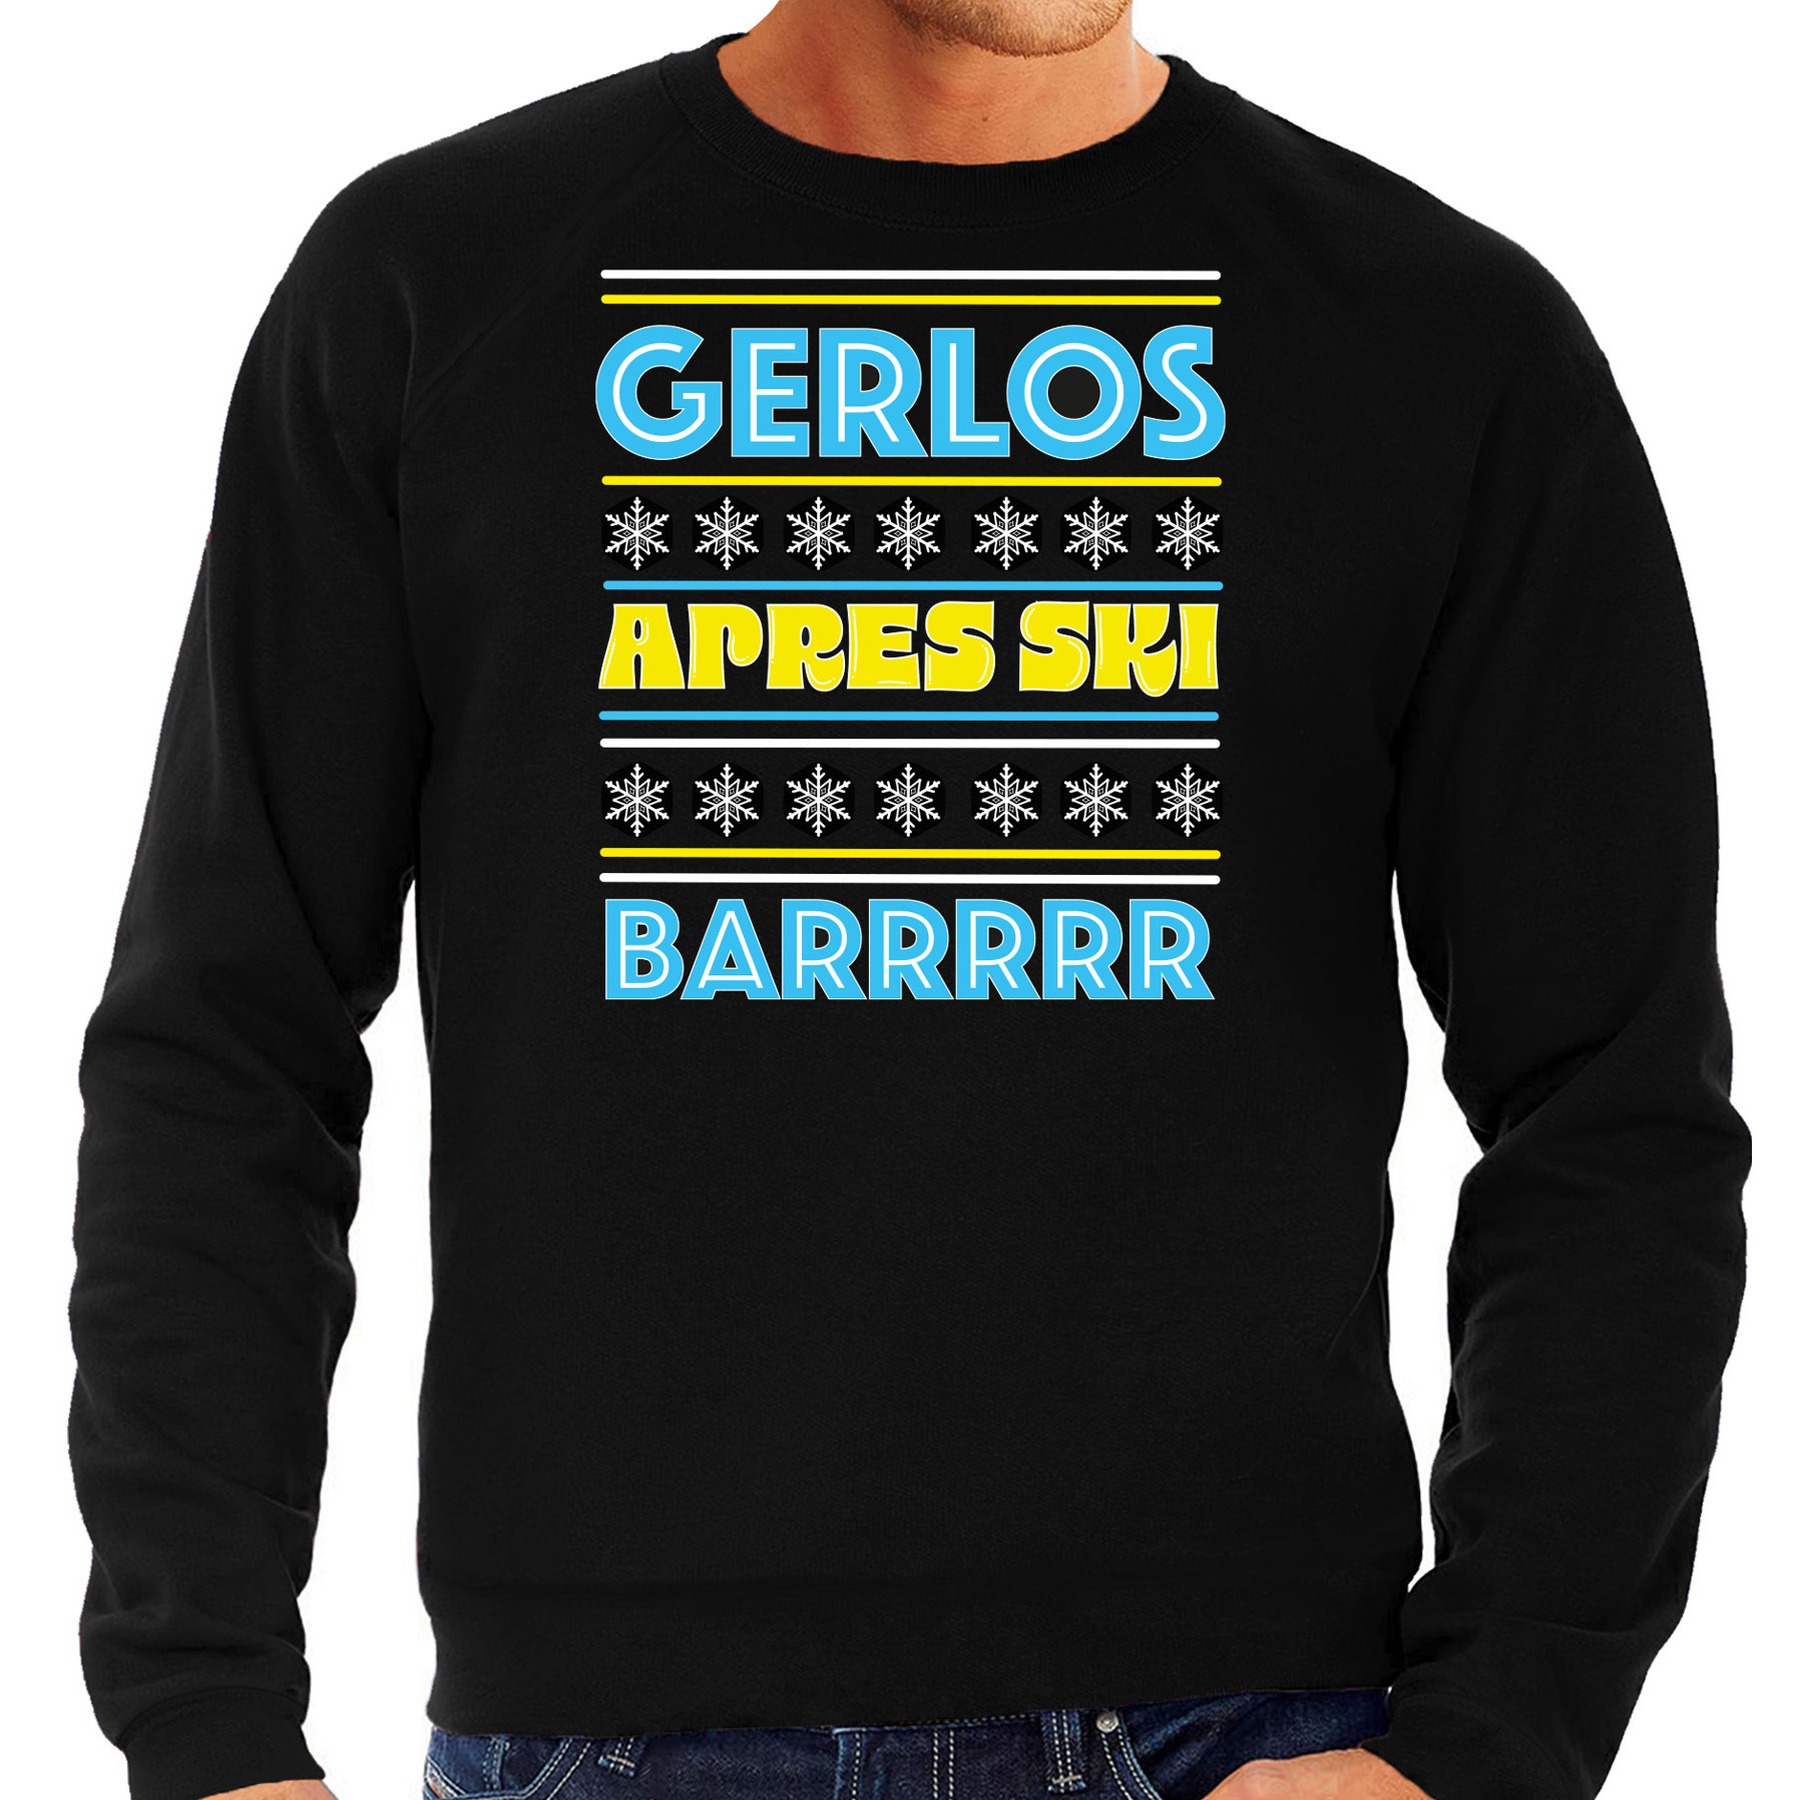 Apres ski sweater voor heren Gerlos zwart apresski bar-kroeg skien-snowboarden wintersport